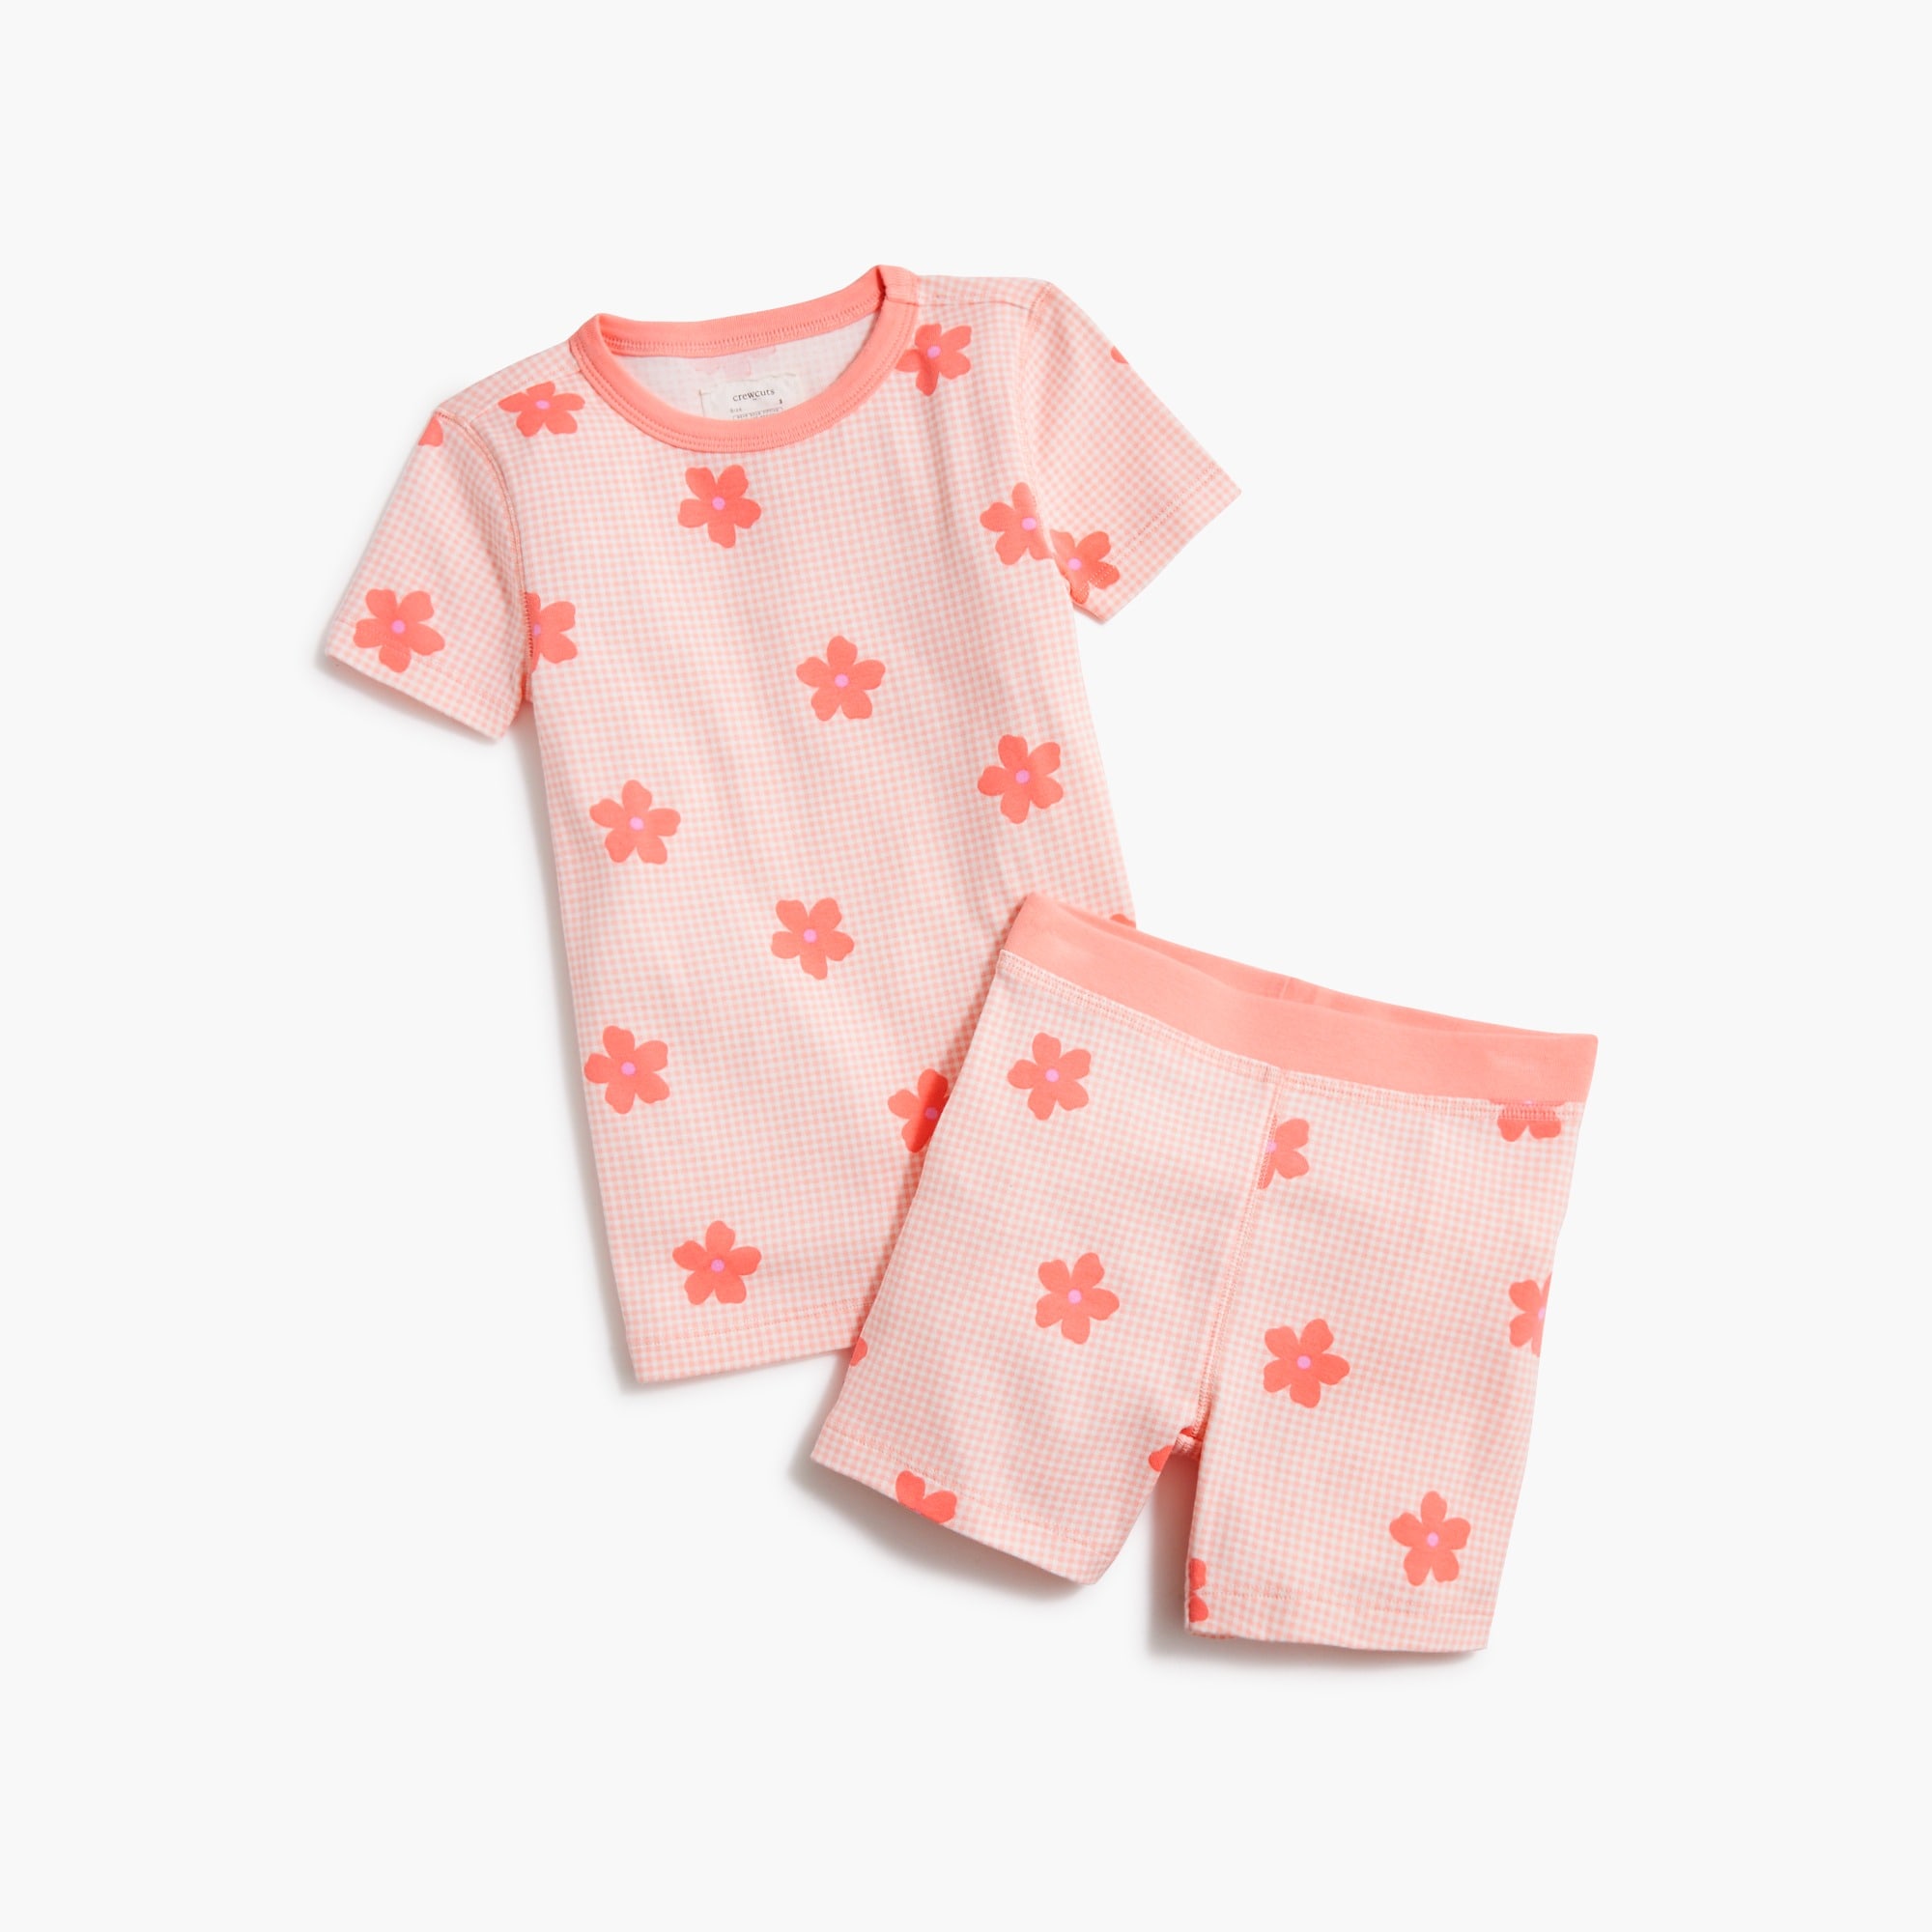 Girls' gingham flower pajama set